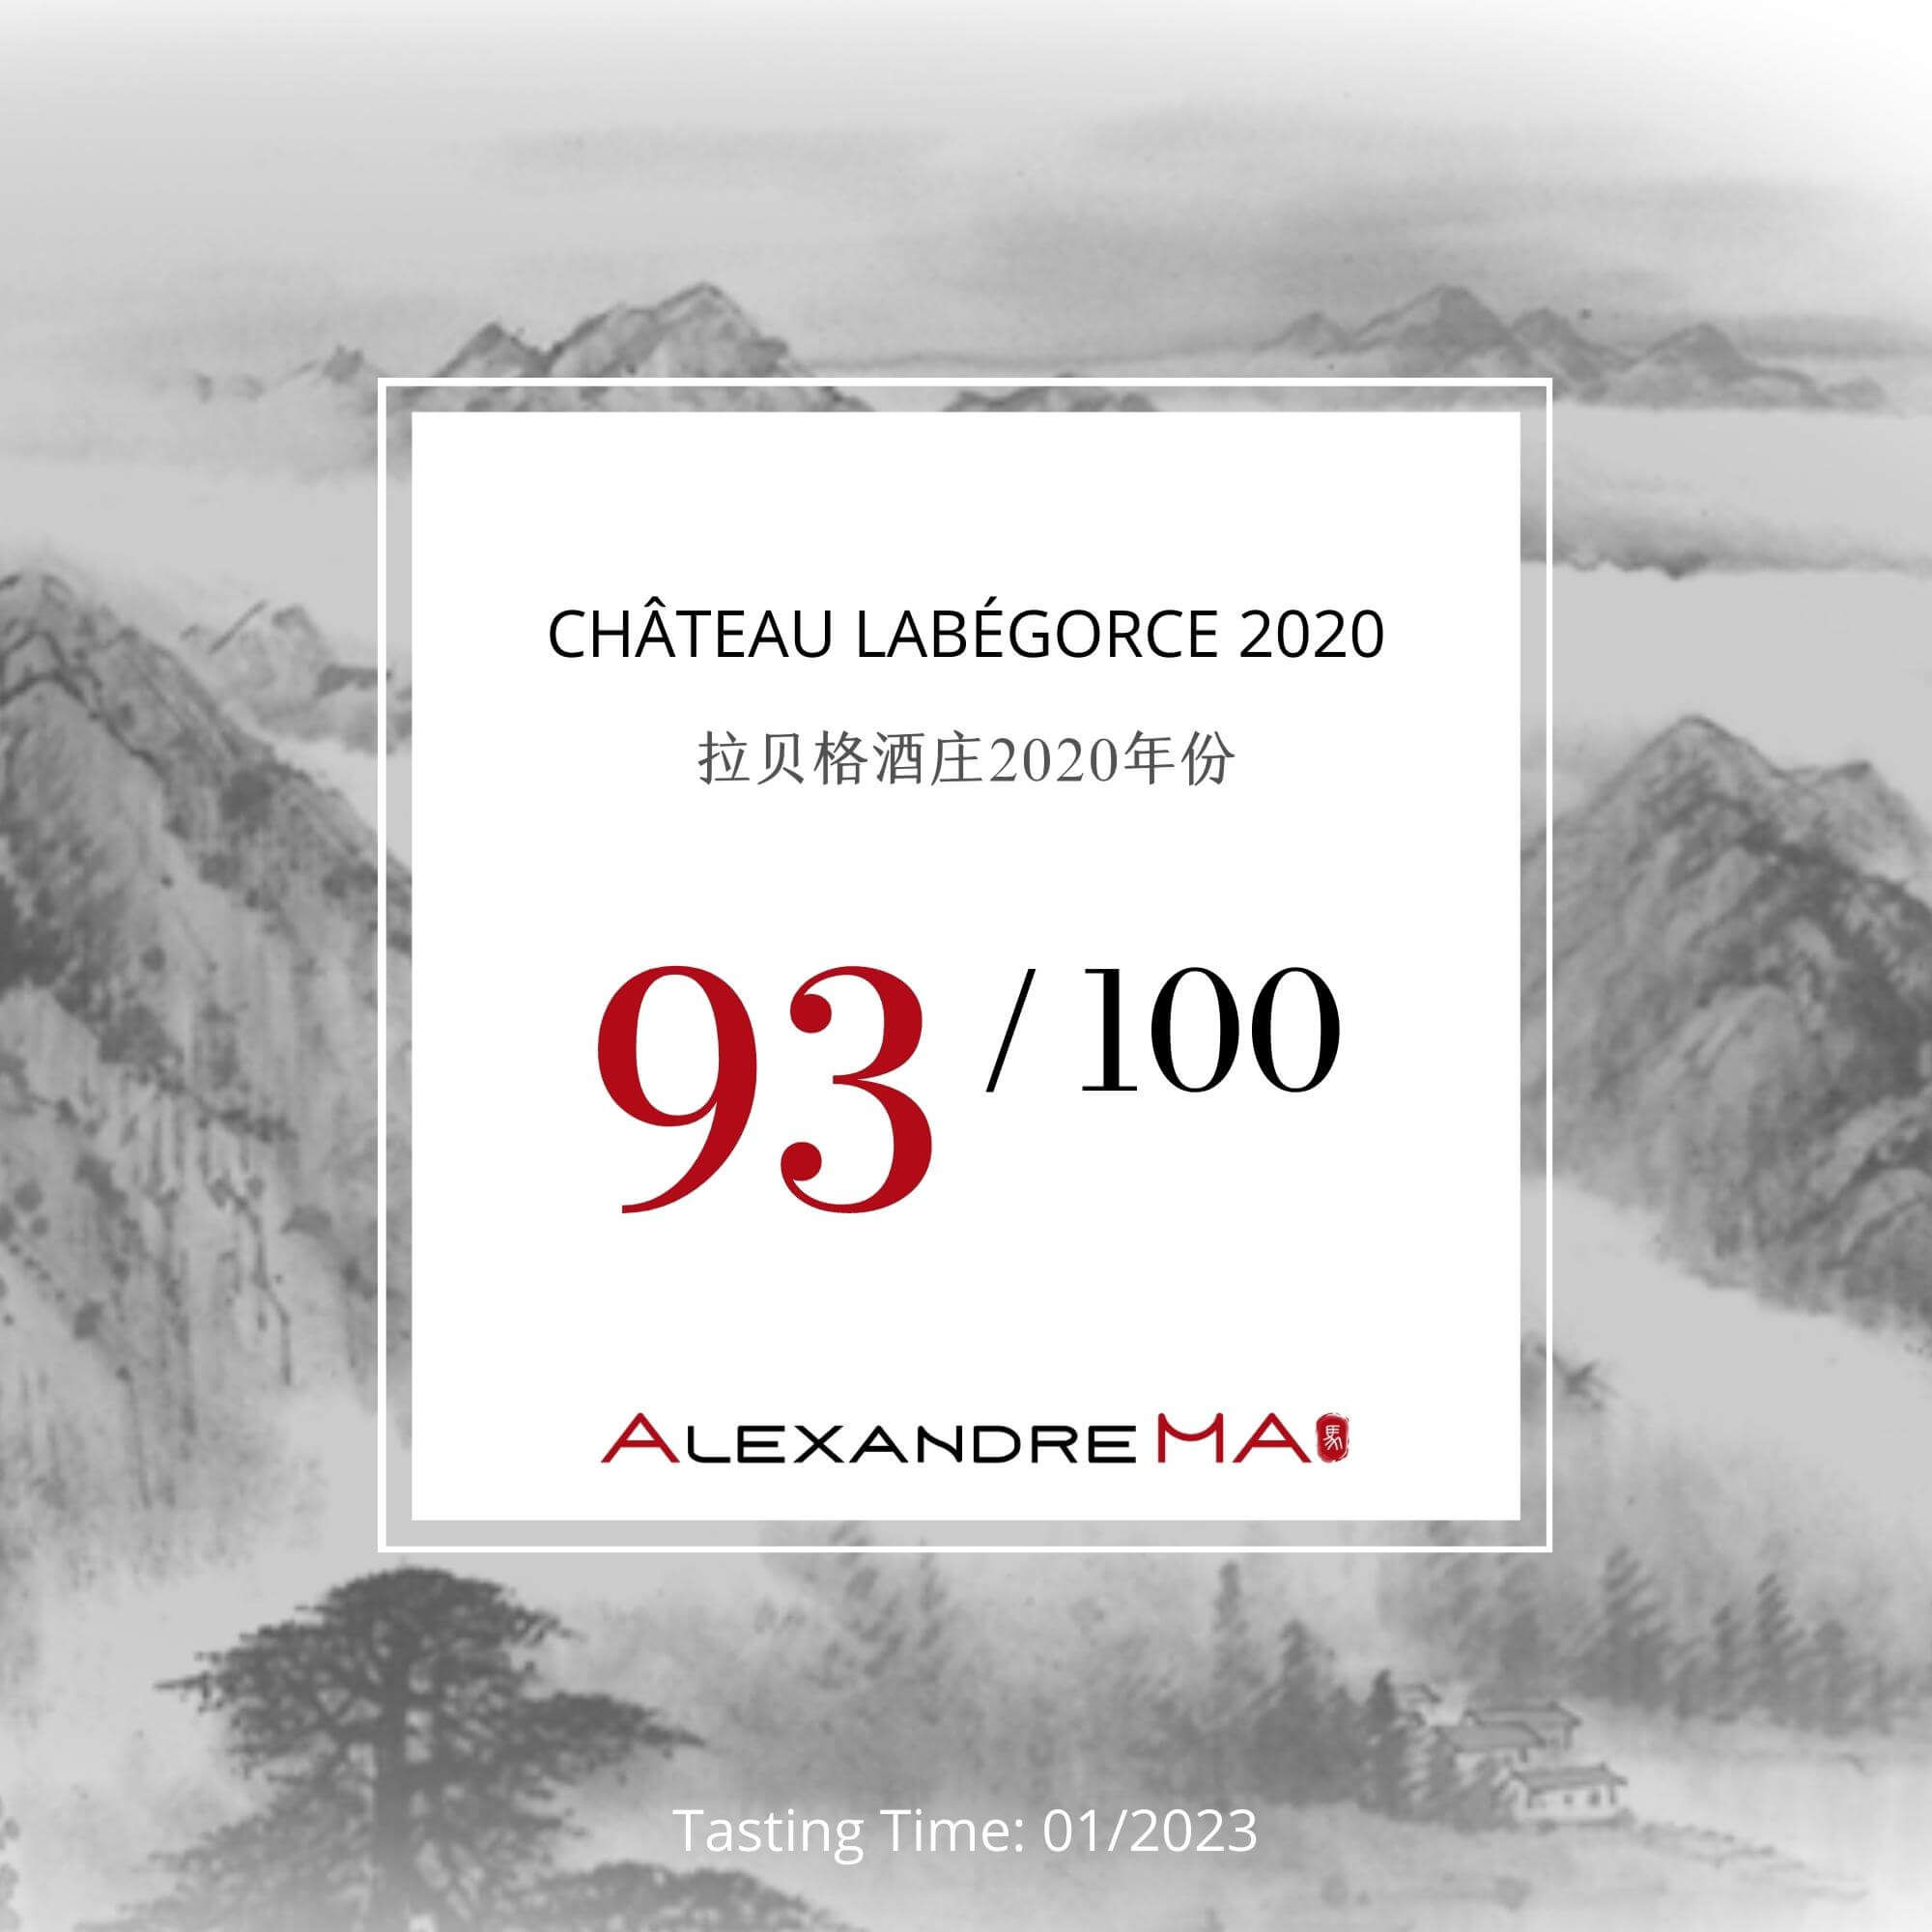 Château Labégorce 2020 - Alexandre MA